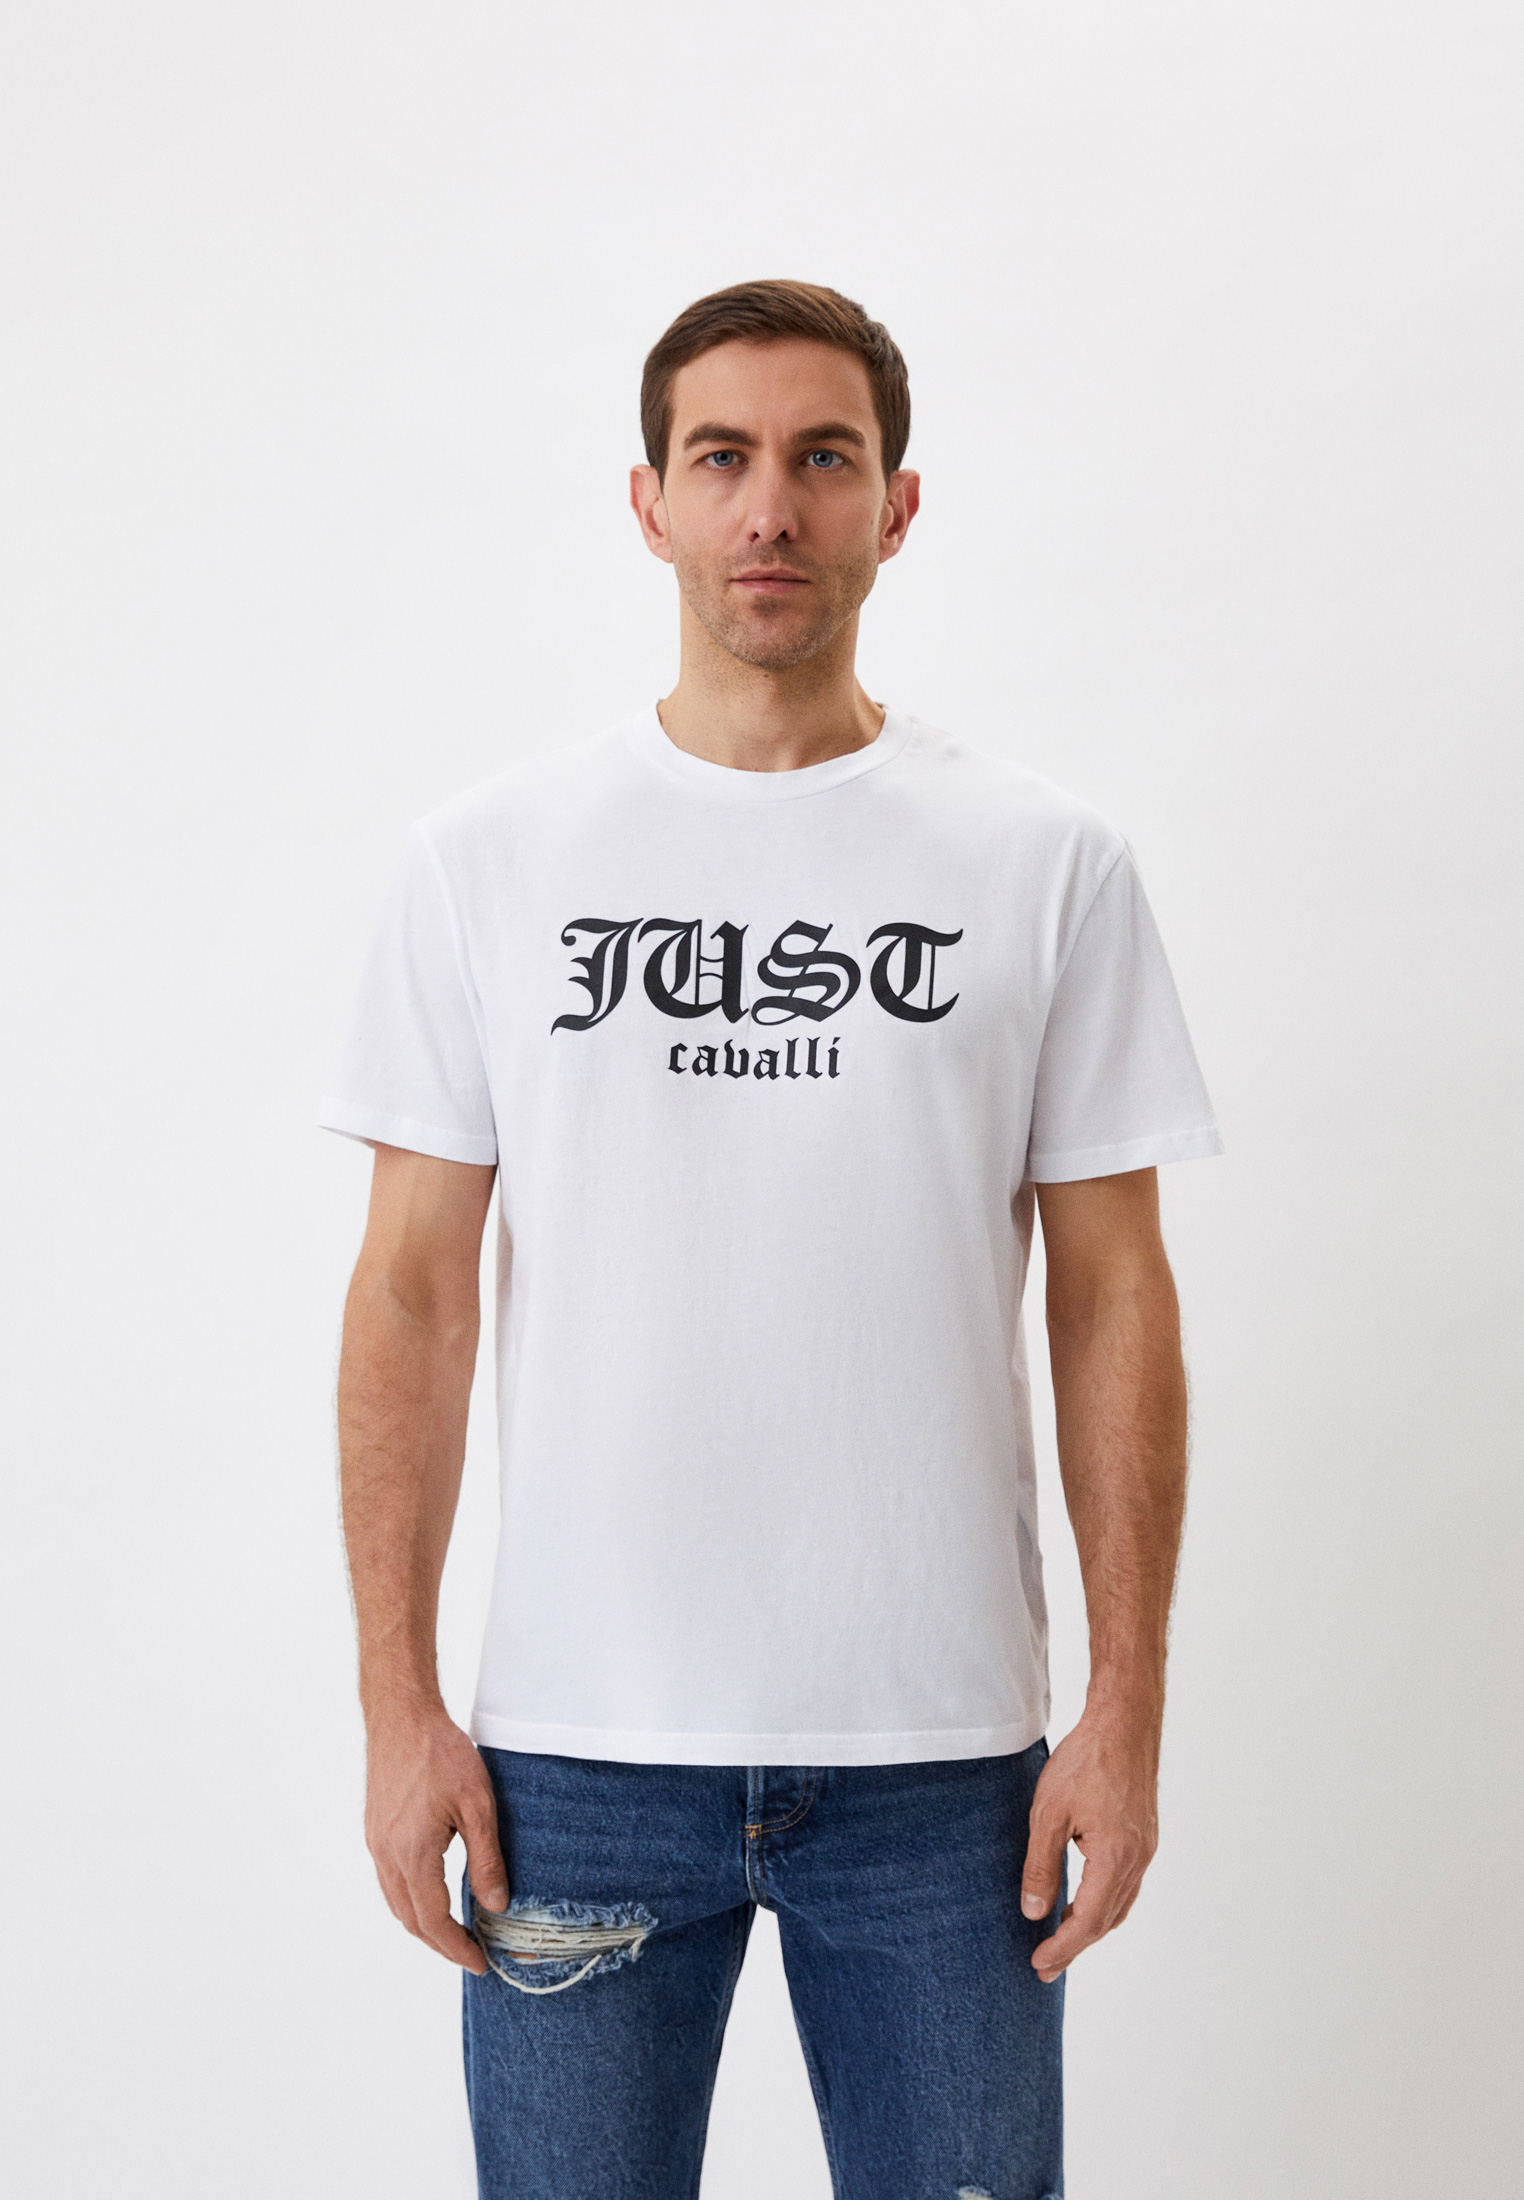 Мужская футболка Just Cavalli (Джаст Кавалли) S03GC0659N20663: изображение 1